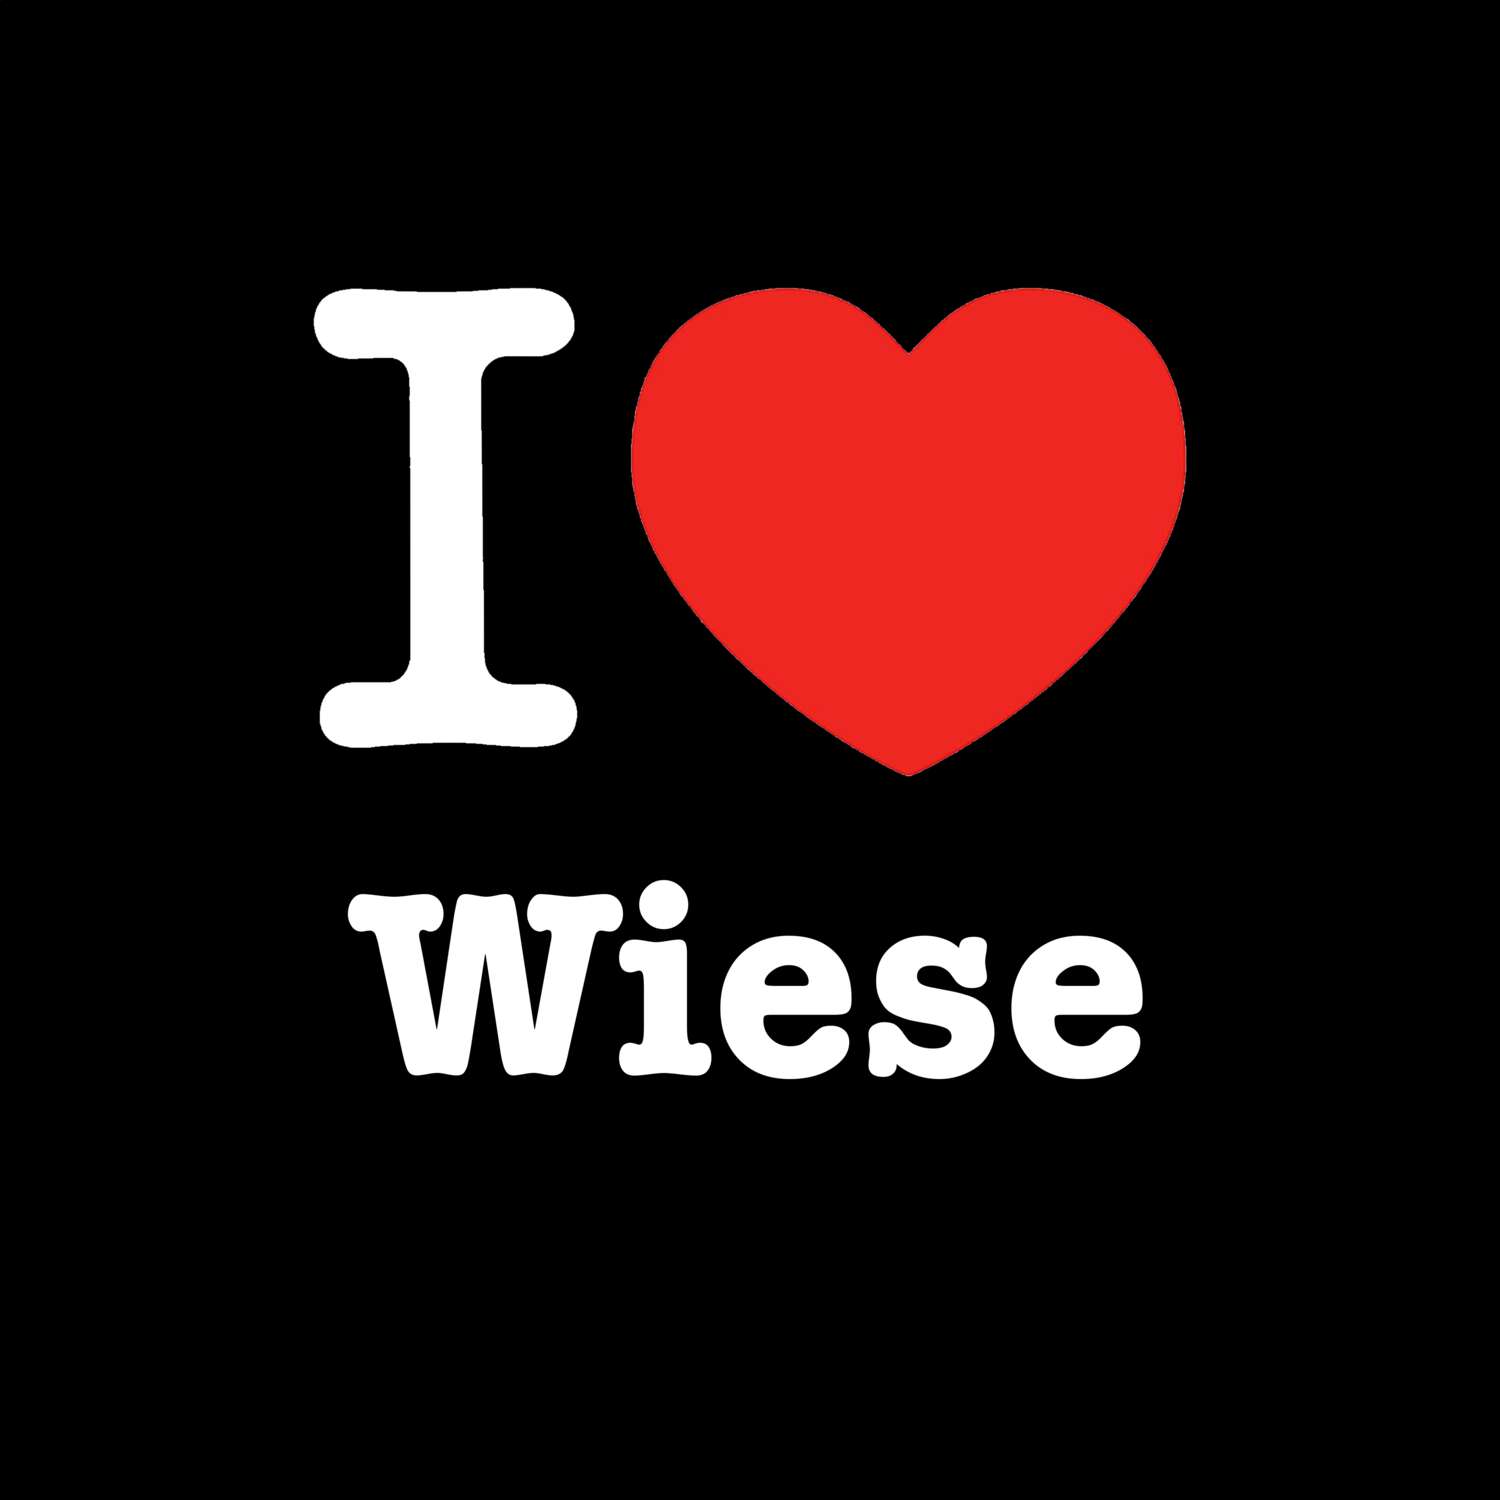 Wiese T-Shirt »I love«